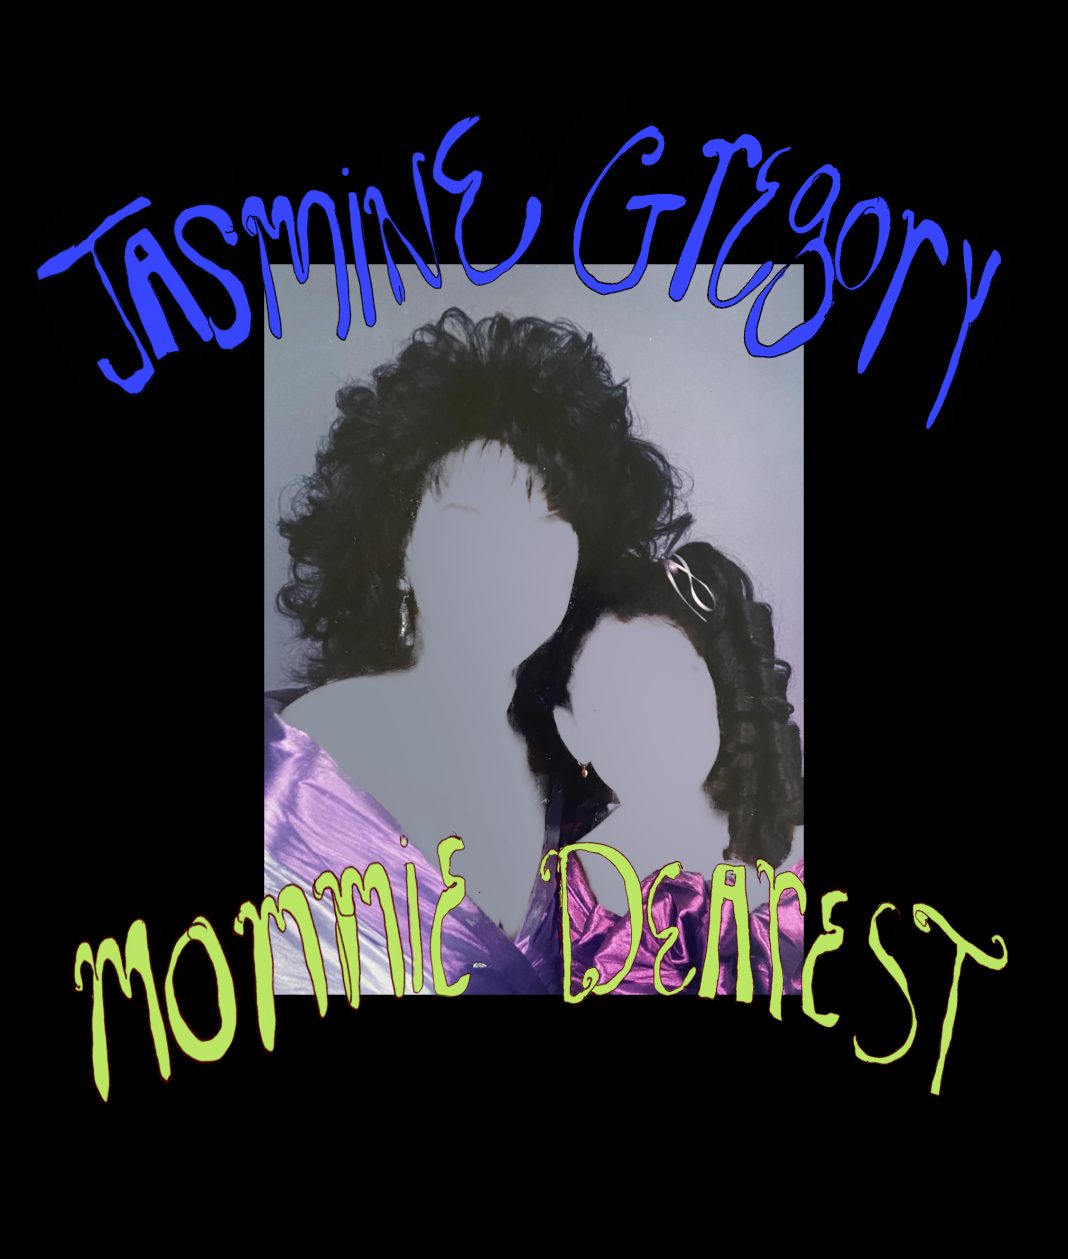 Jasmine Gregory – Mommie dearesthttps://www.exibart.com/repository/media/formidable/11/img/5c4/Flyer-flat-titleonlyblue-1068x1259.jpg